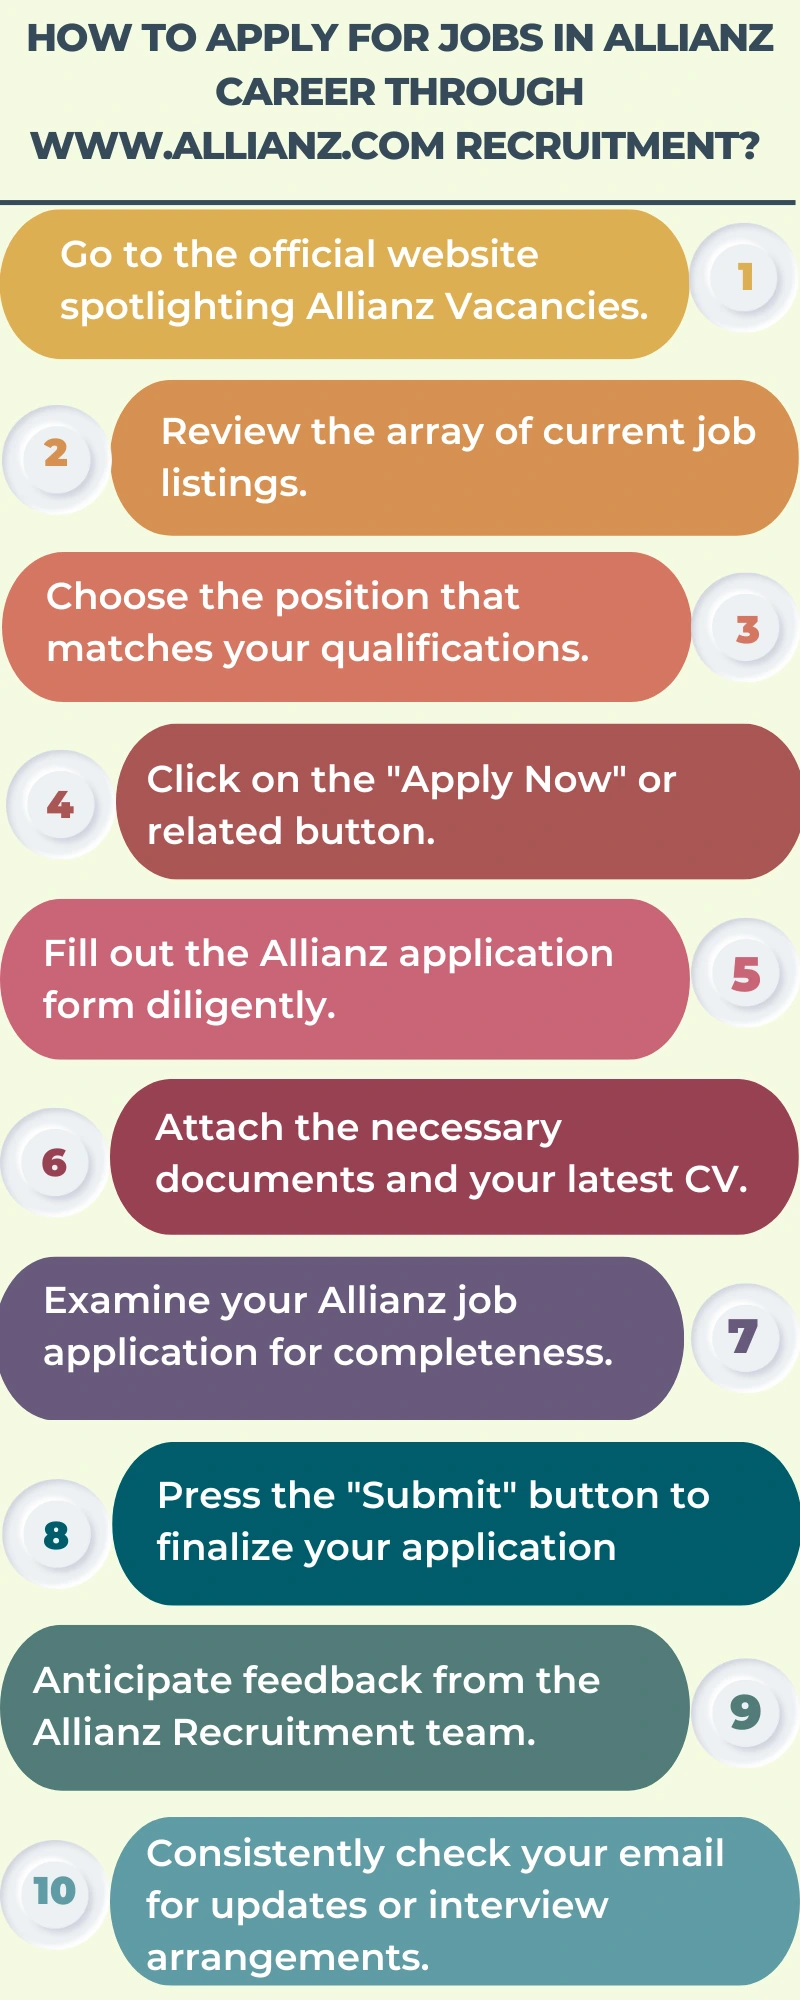 How to Apply for Jobs in Allianz Career through www.allianz.com recruitment?